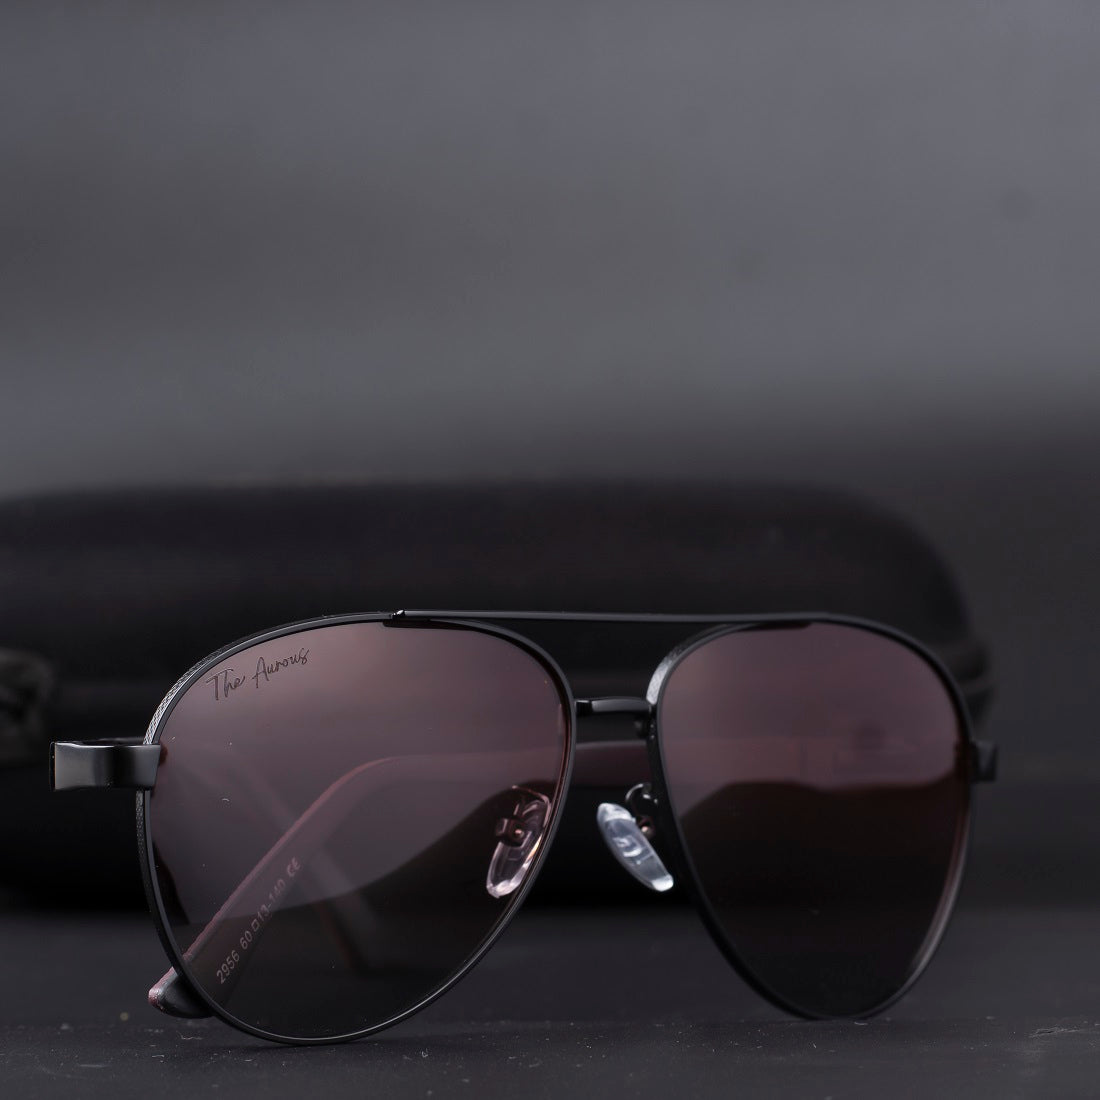 The Aurous Infinity Aviator Polarized Sunglasses